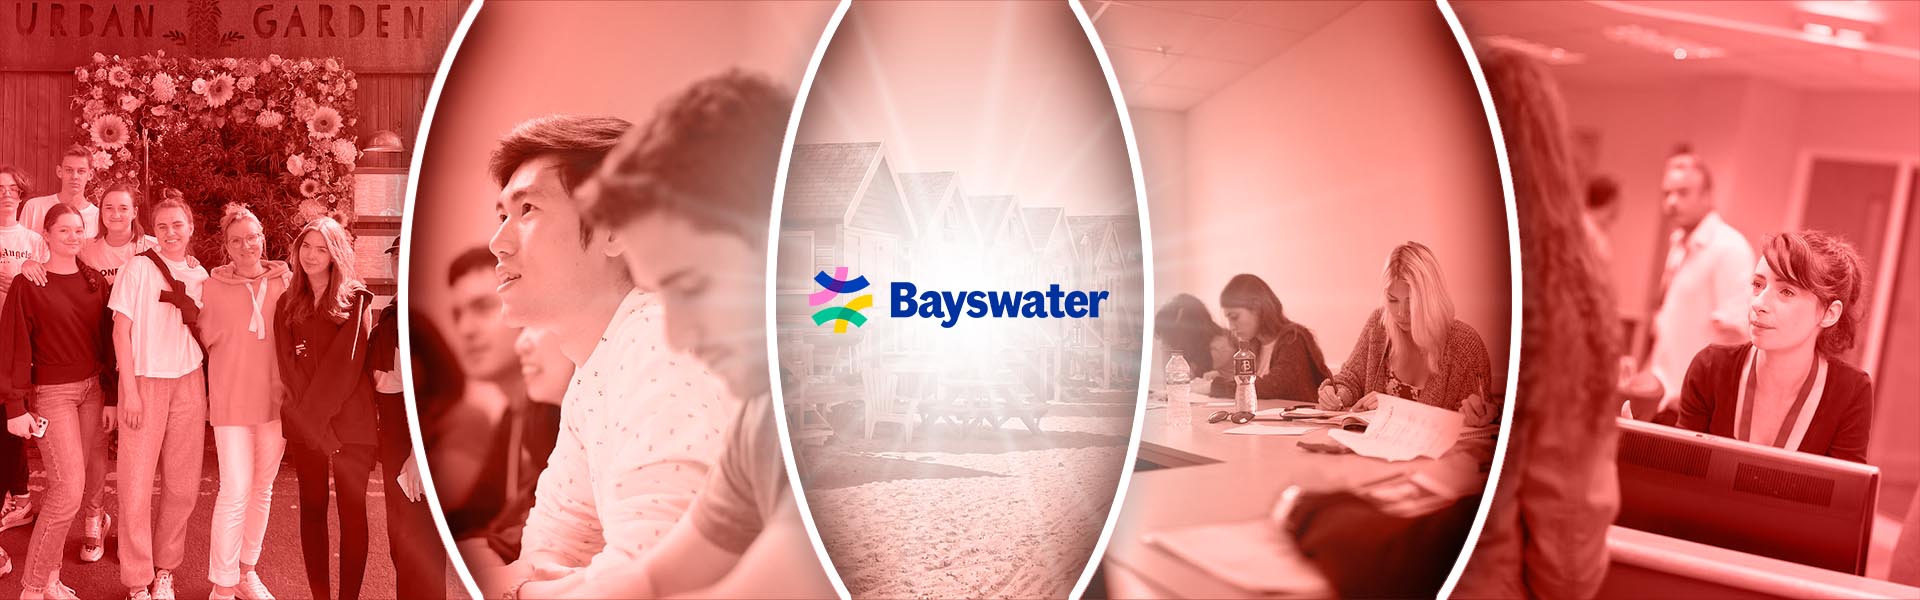 Bayswater Bournemouth Dil Okulu